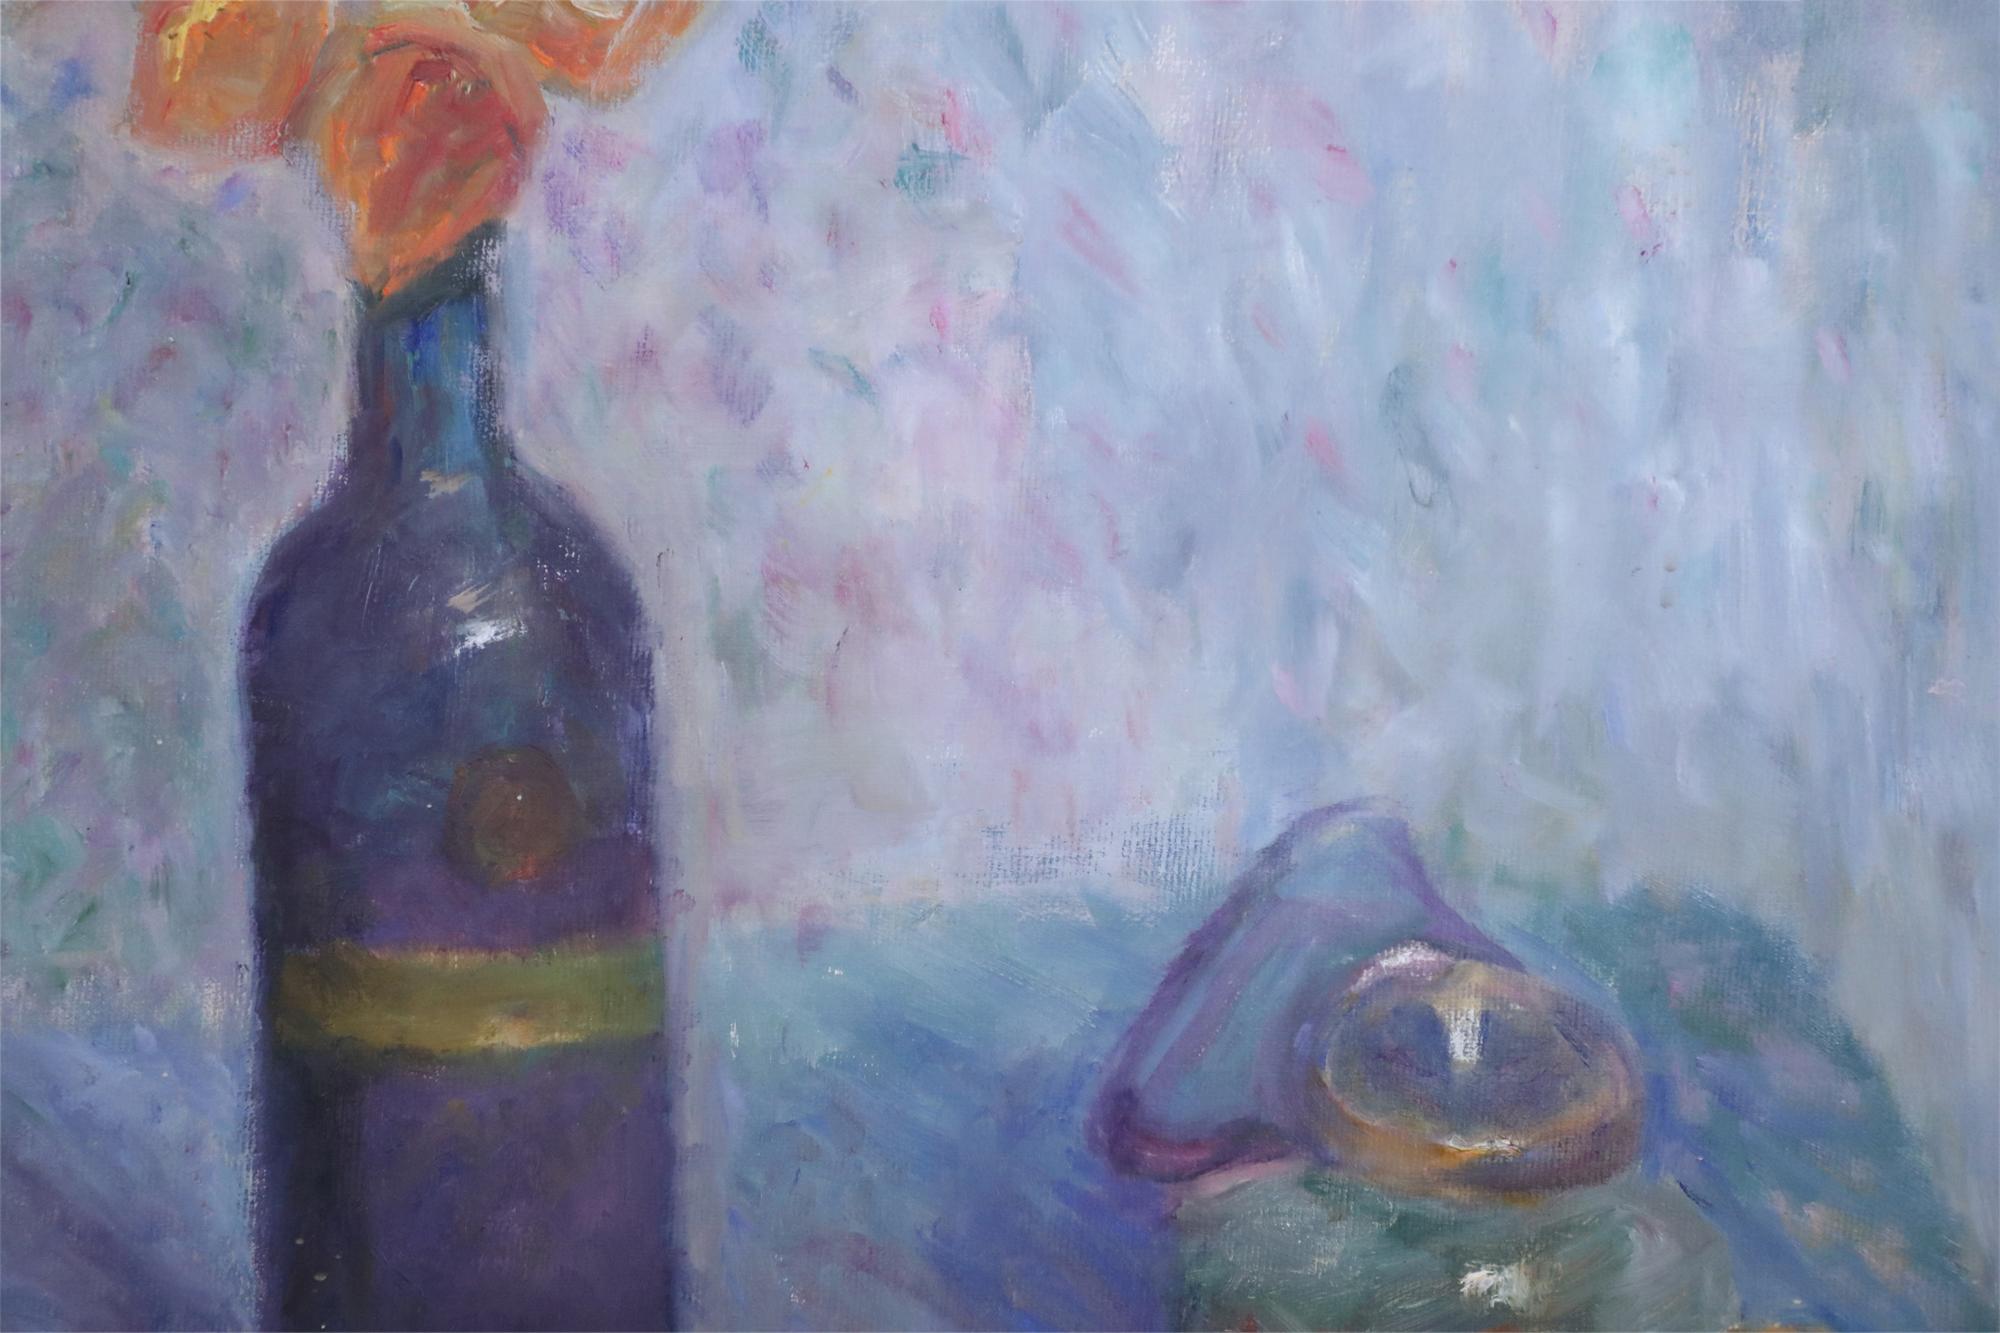 wine bottle still life painting